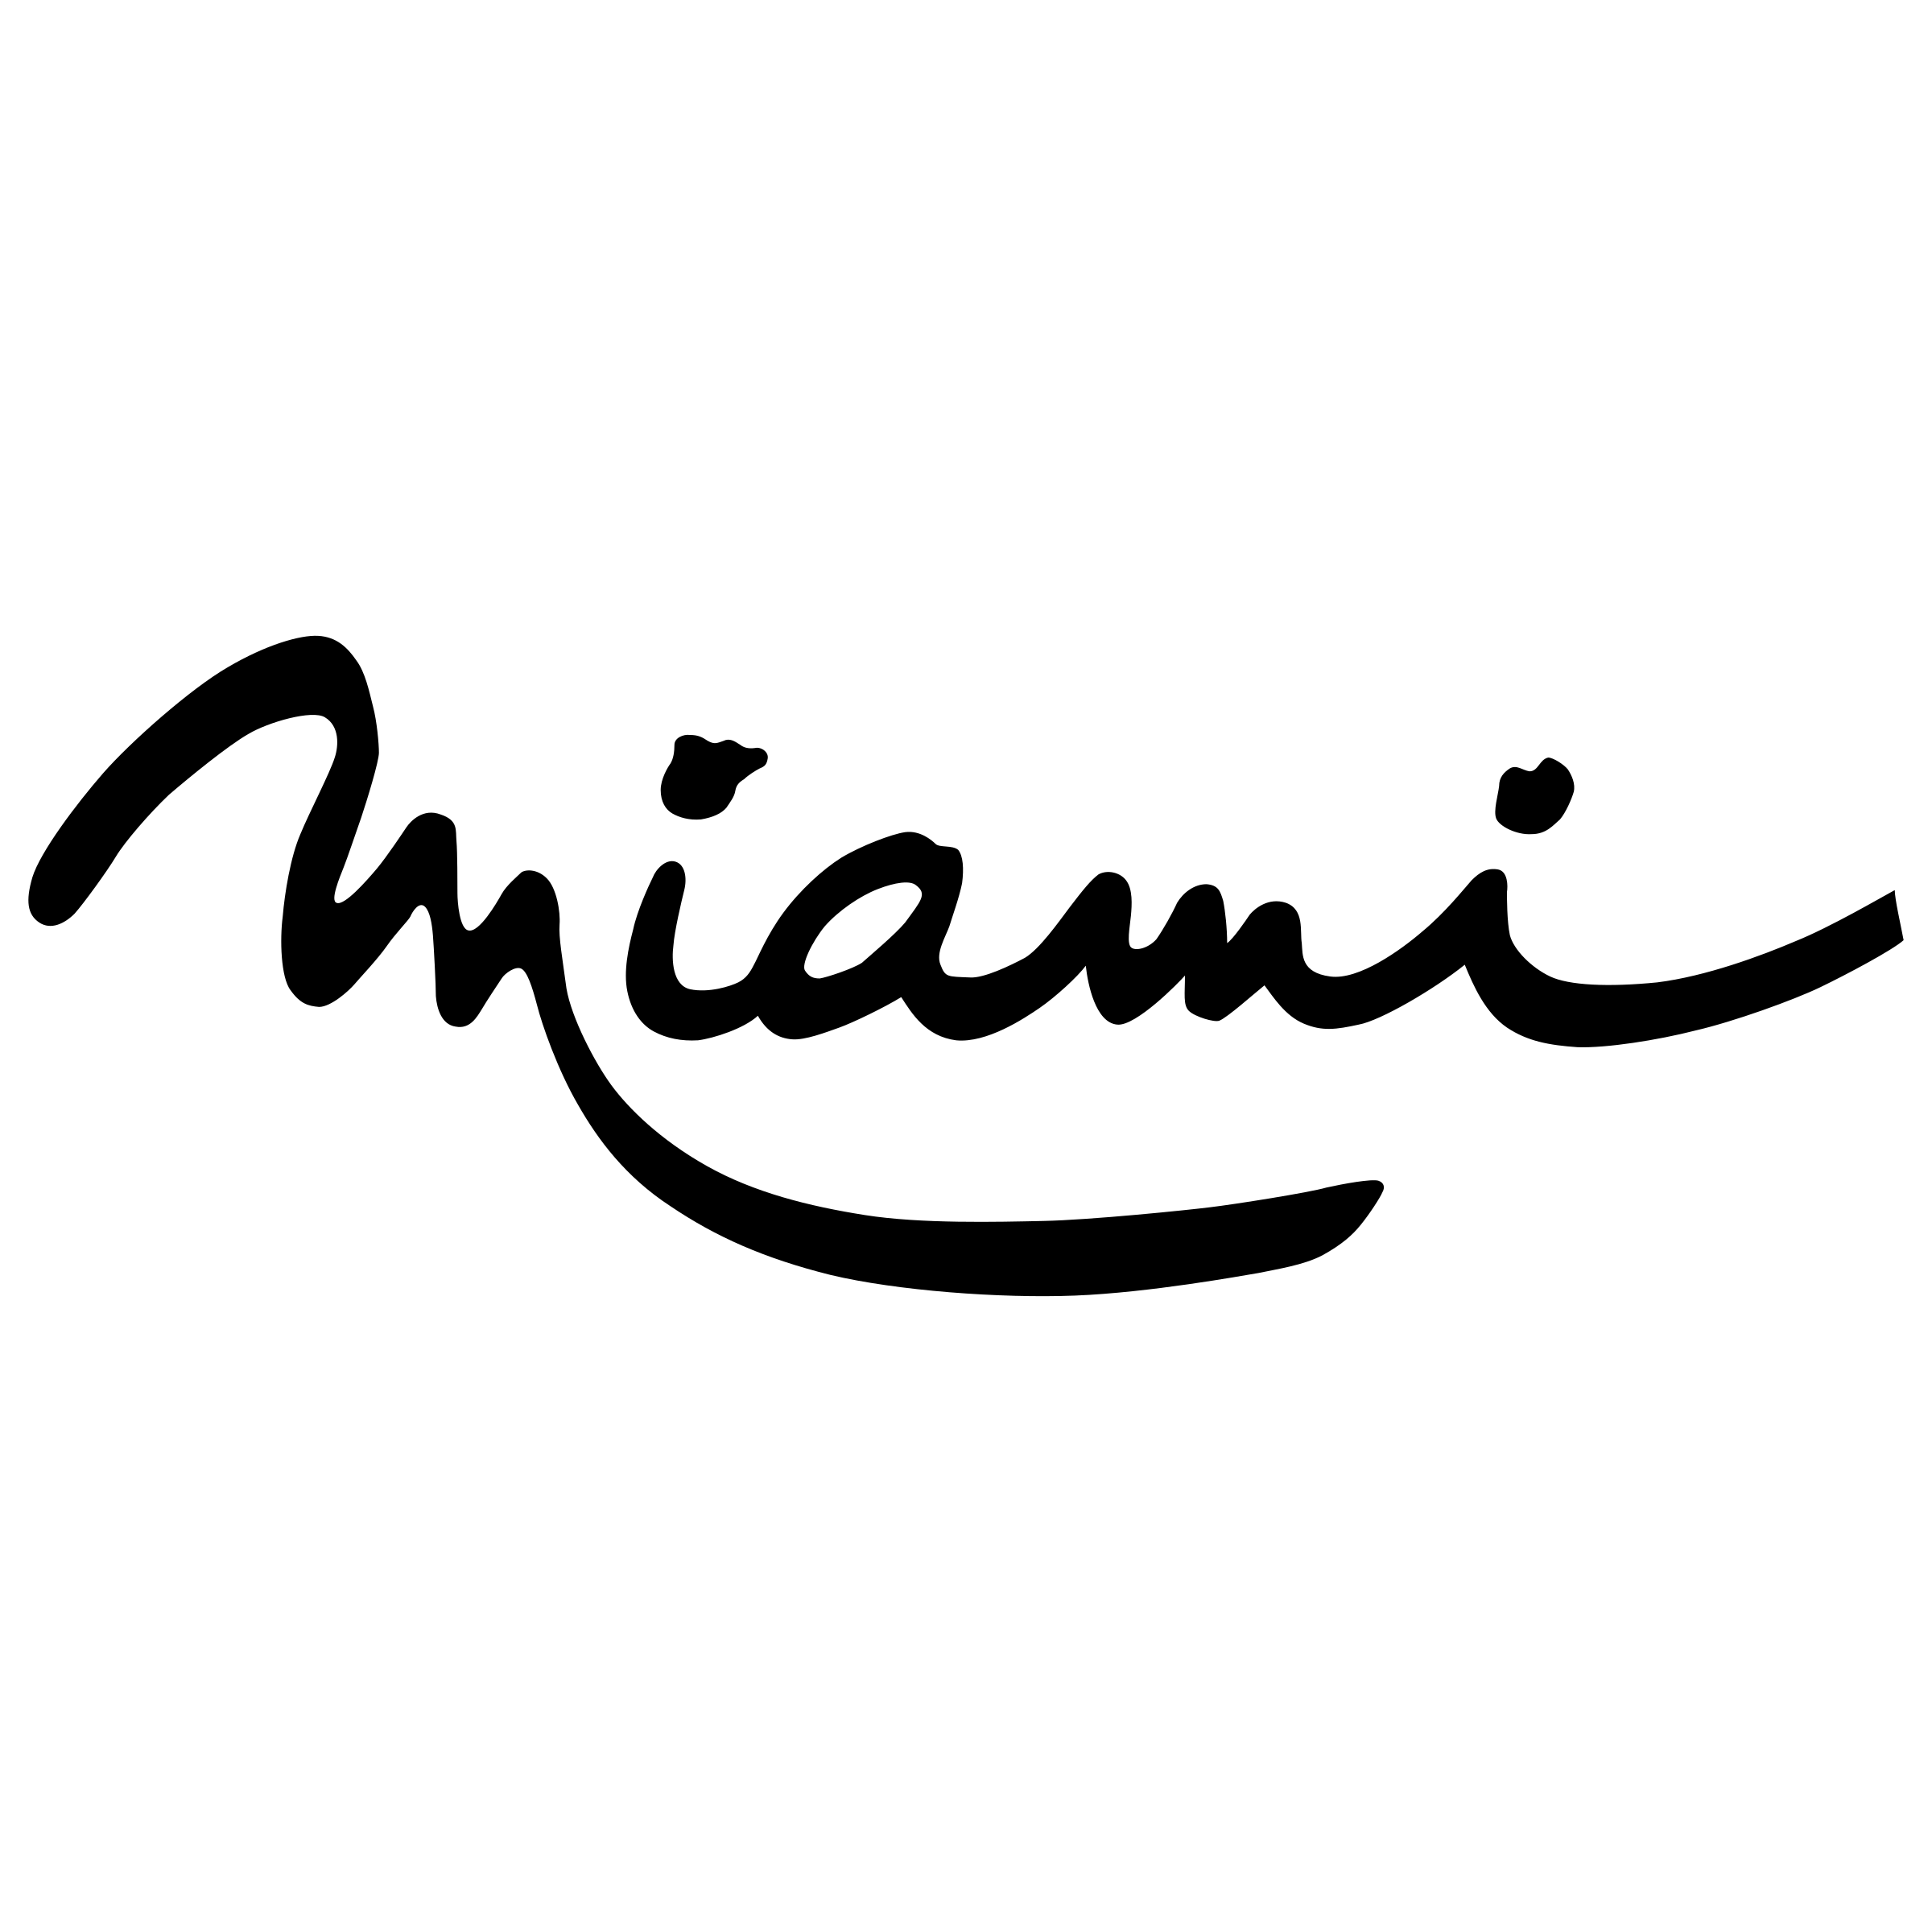 Miami Logo - Miami Logo PNG Transparent & SVG Vector - Freebie Supply